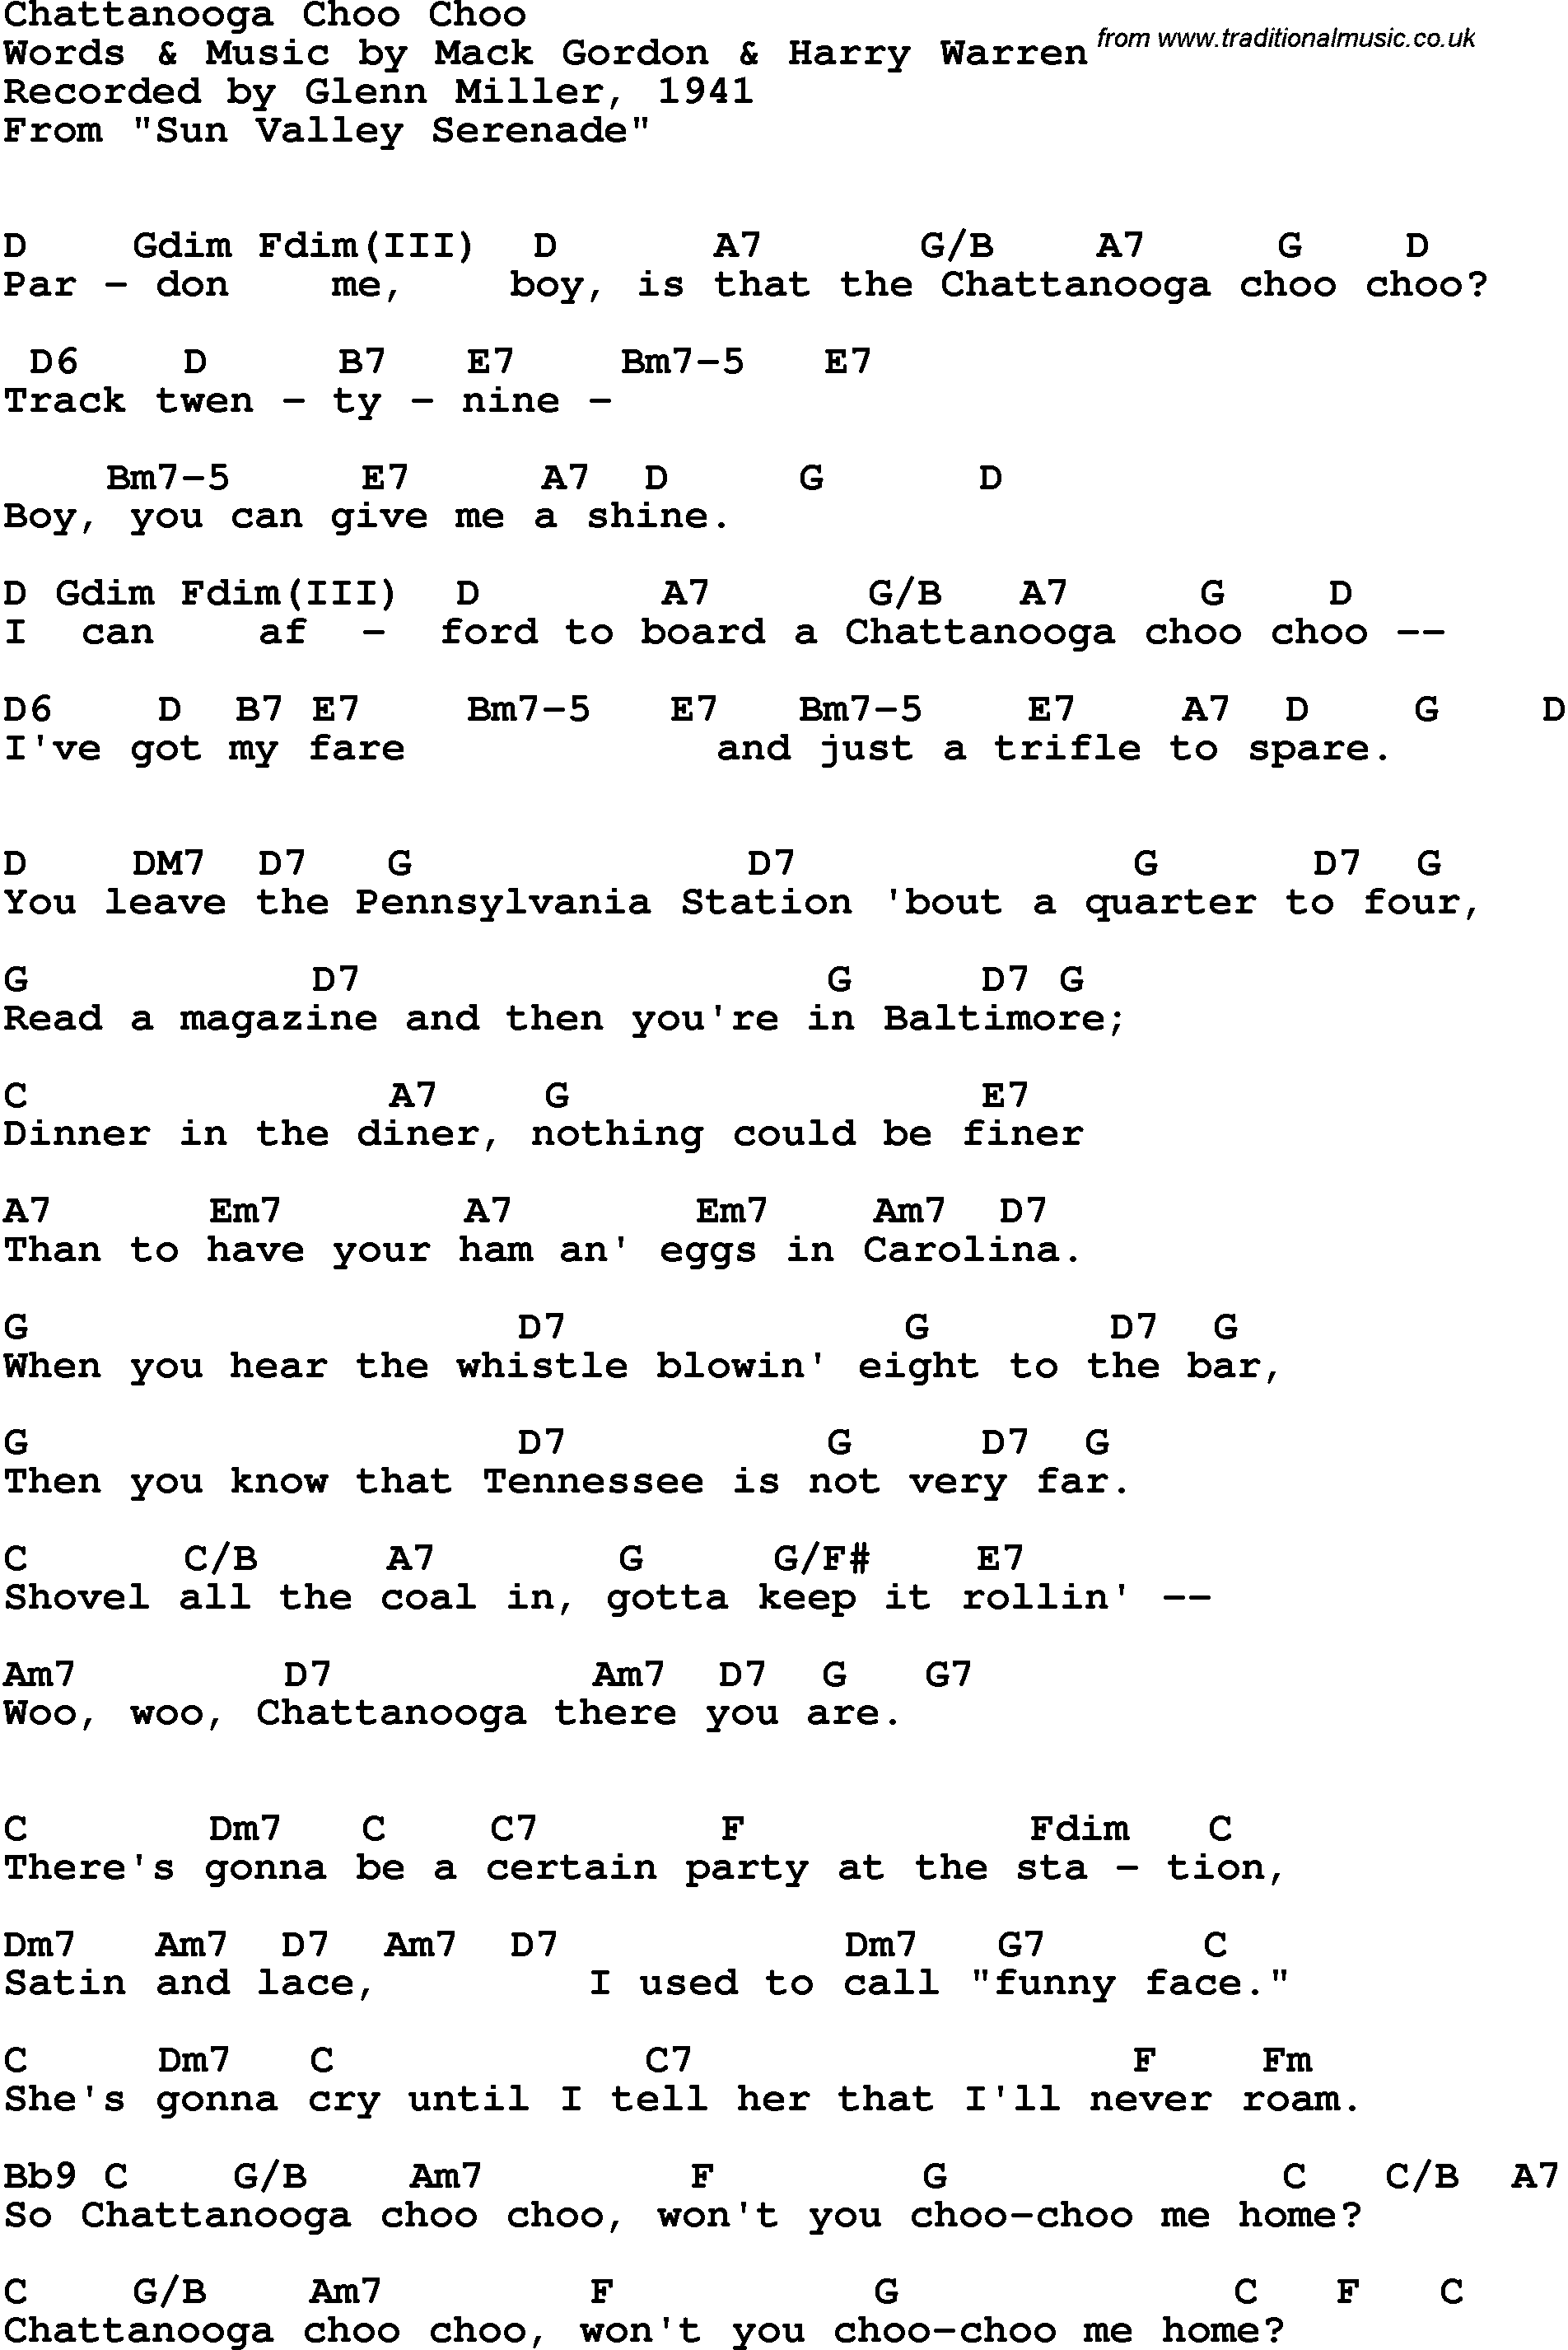 Song Lyrics with guitar chords for Chattanooga Choo Choo - Glenn Miller, 1941